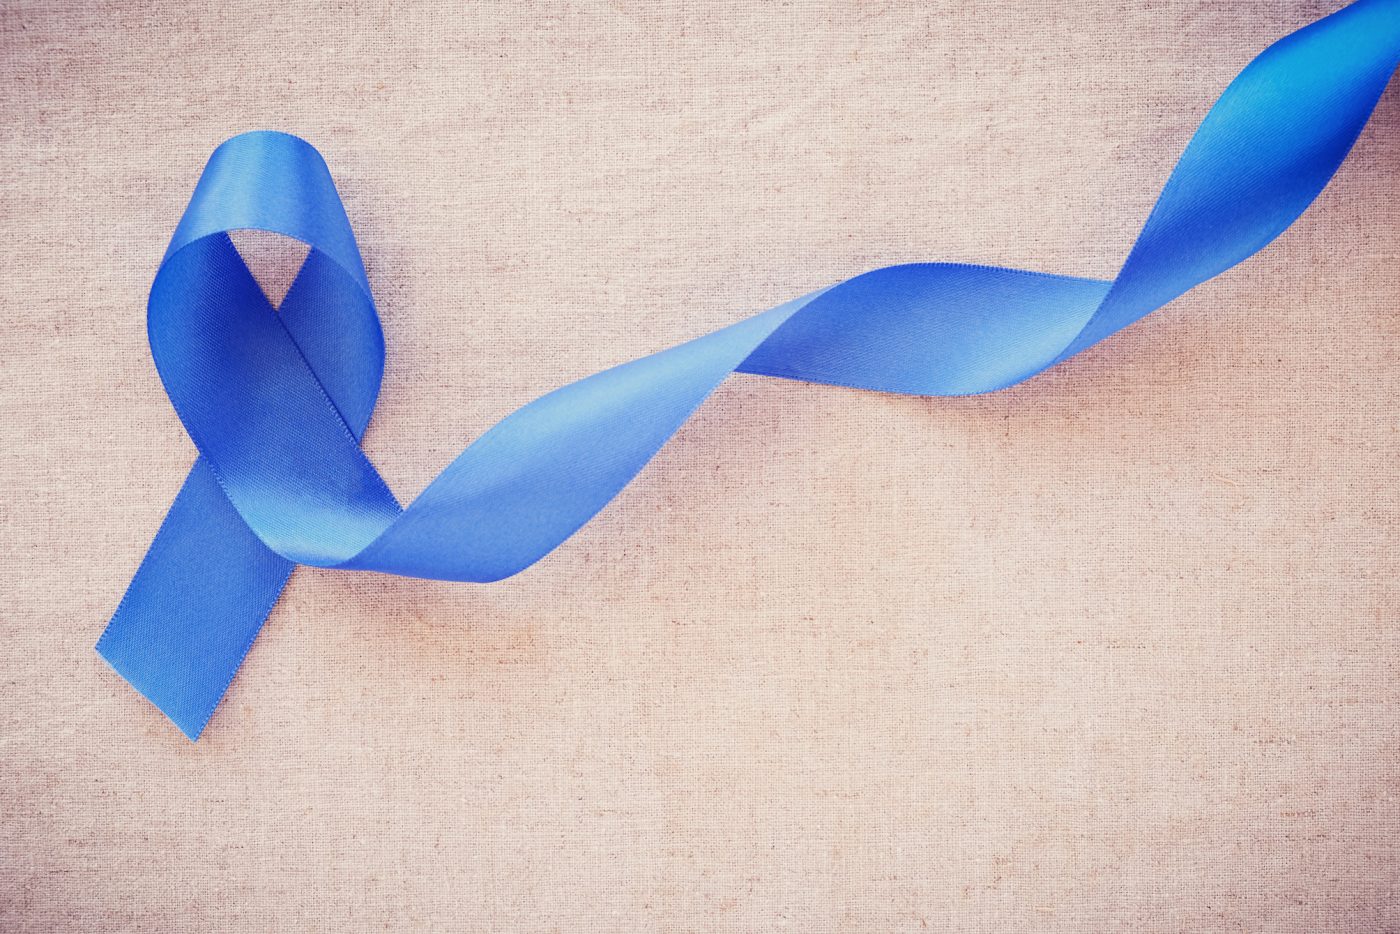 le ruban bleu : symbole du cancer colorectal